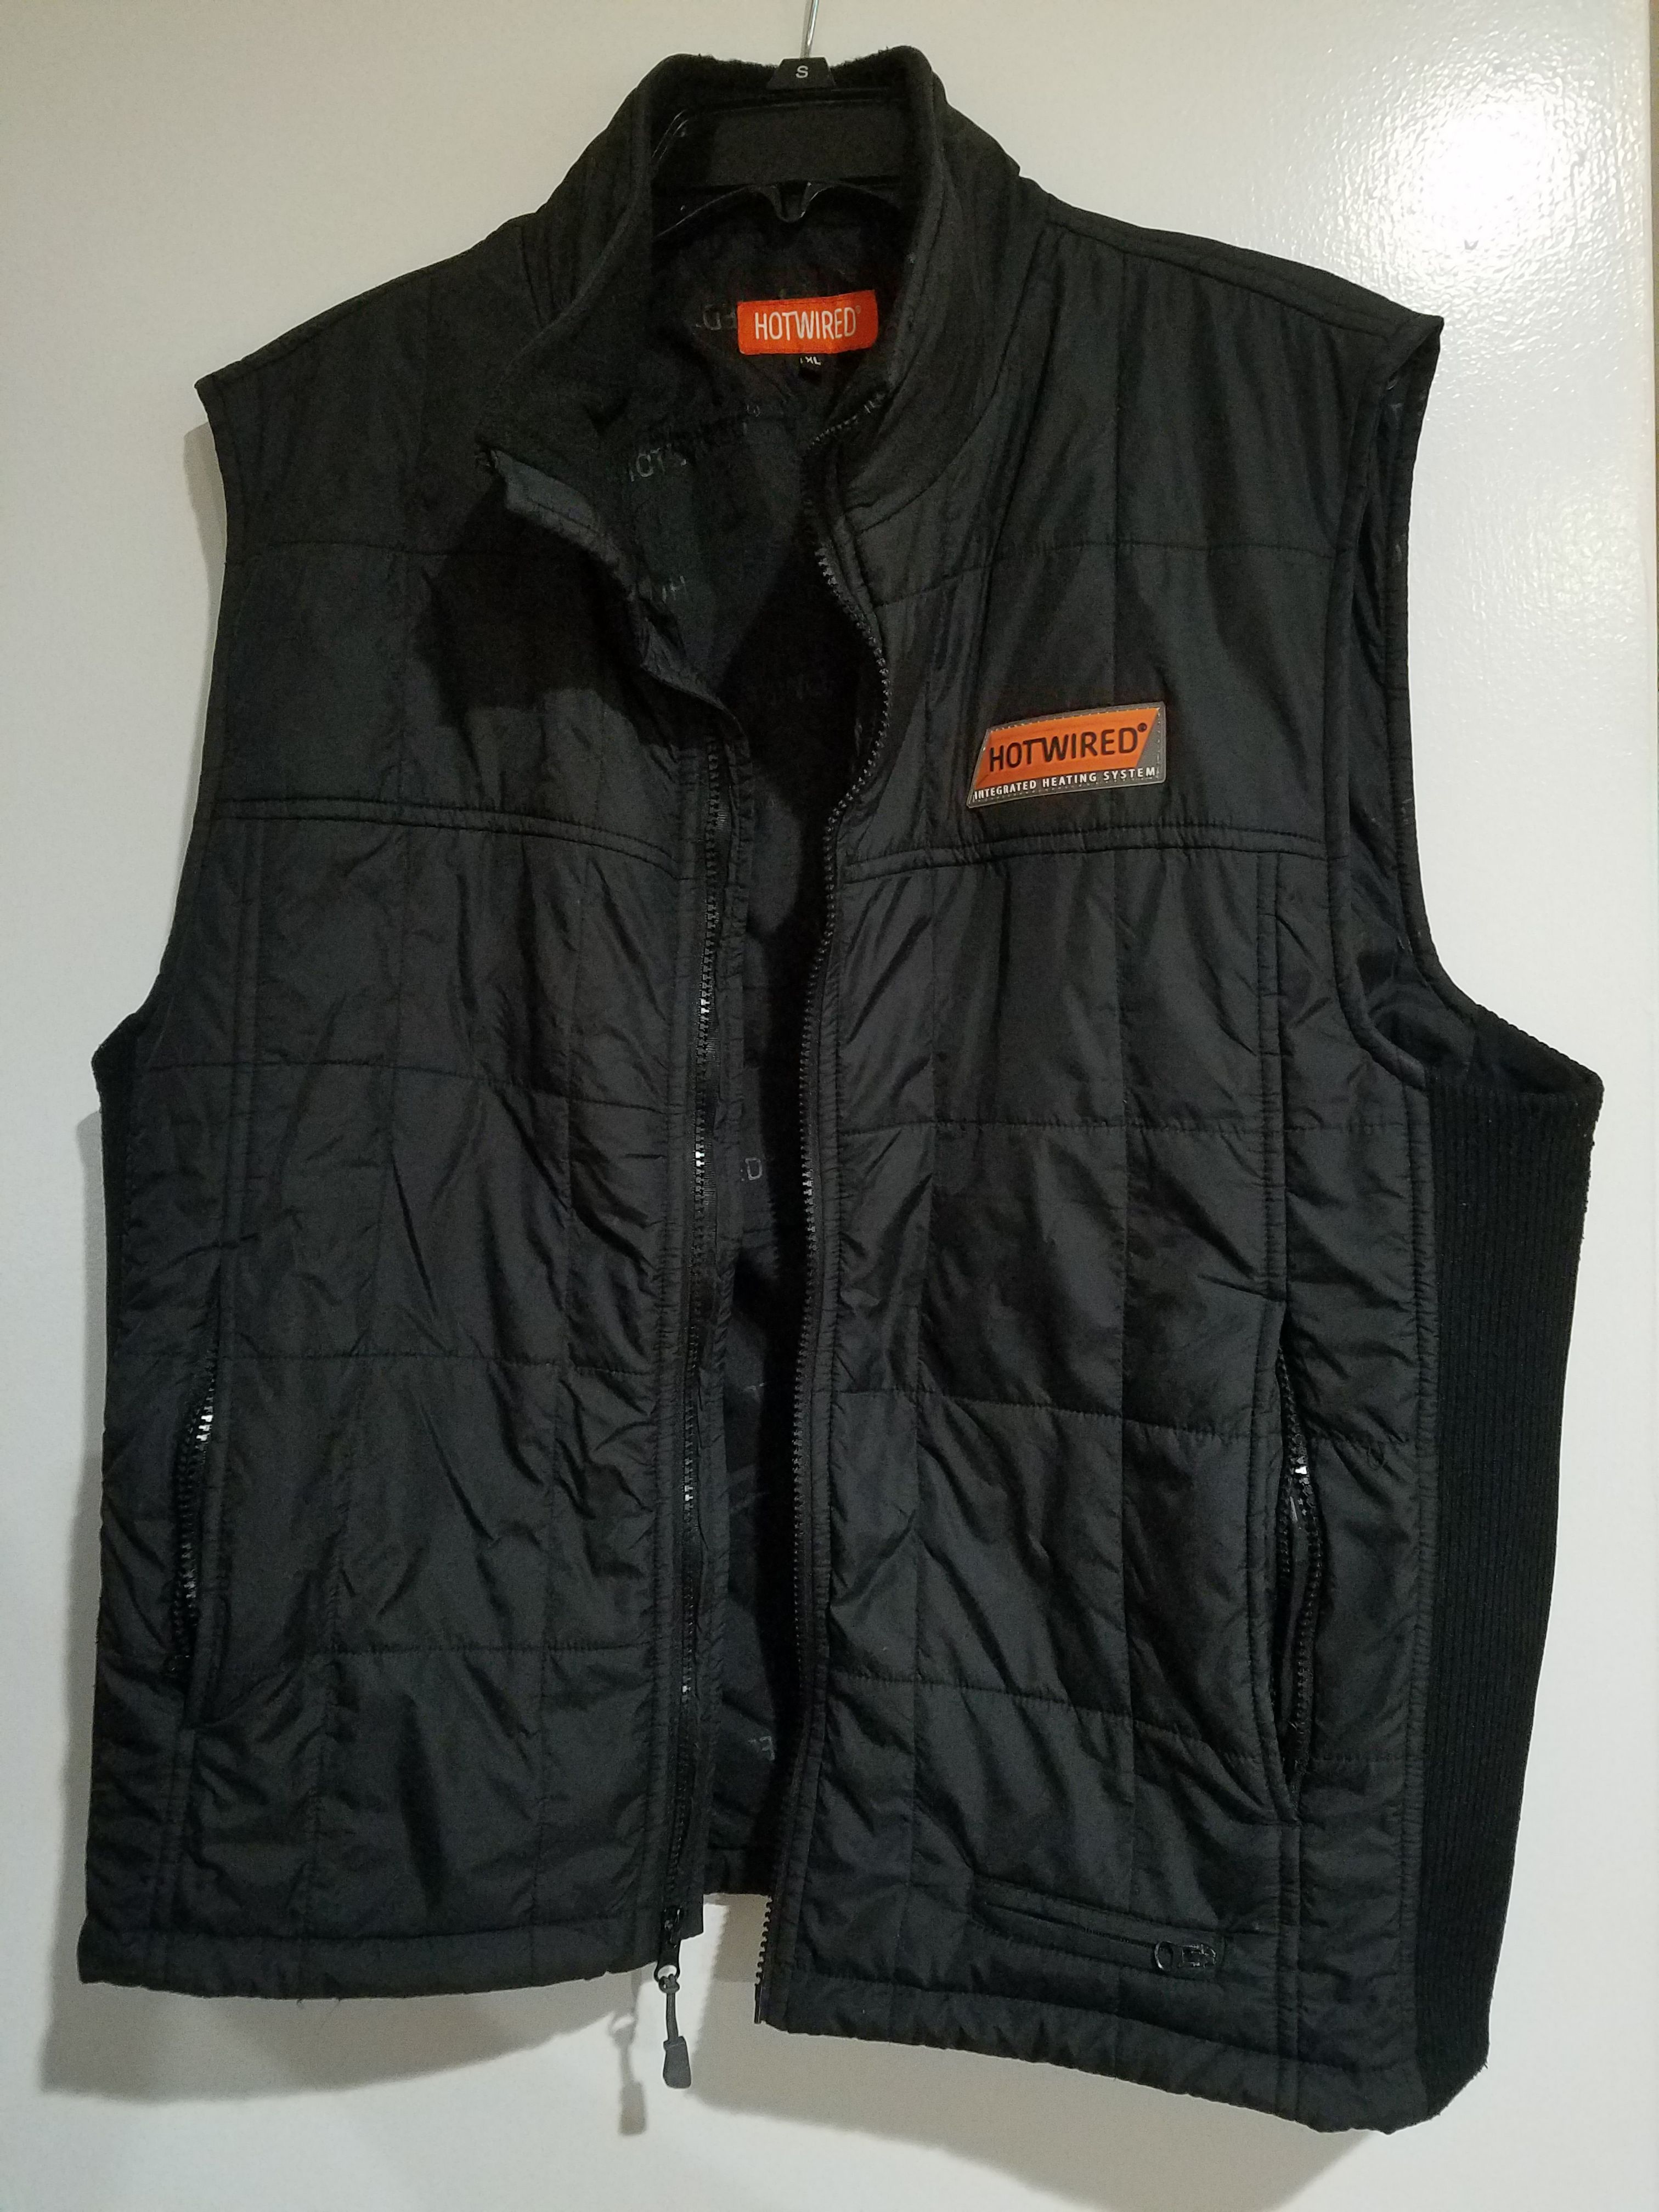 Hotwired XL heated vest.